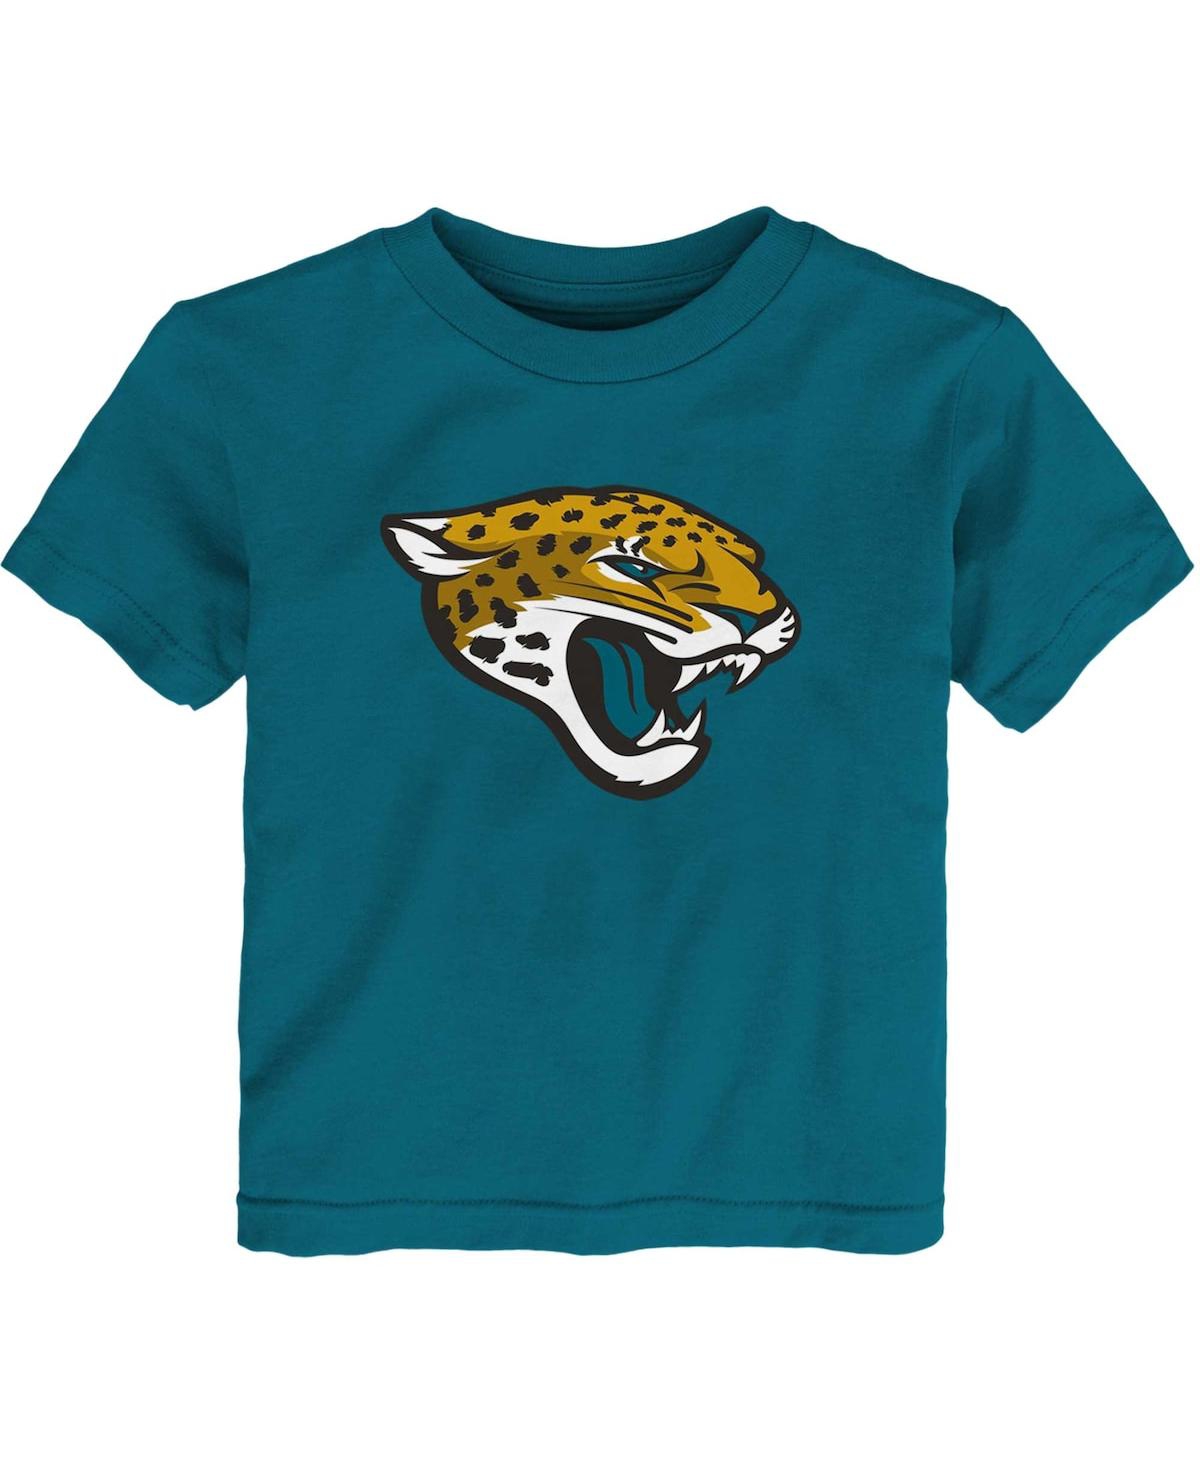 Outerstuff Babies' Toddler Boys And Girls Teal Jacksonville Jaguars Primary Logo T-shirt